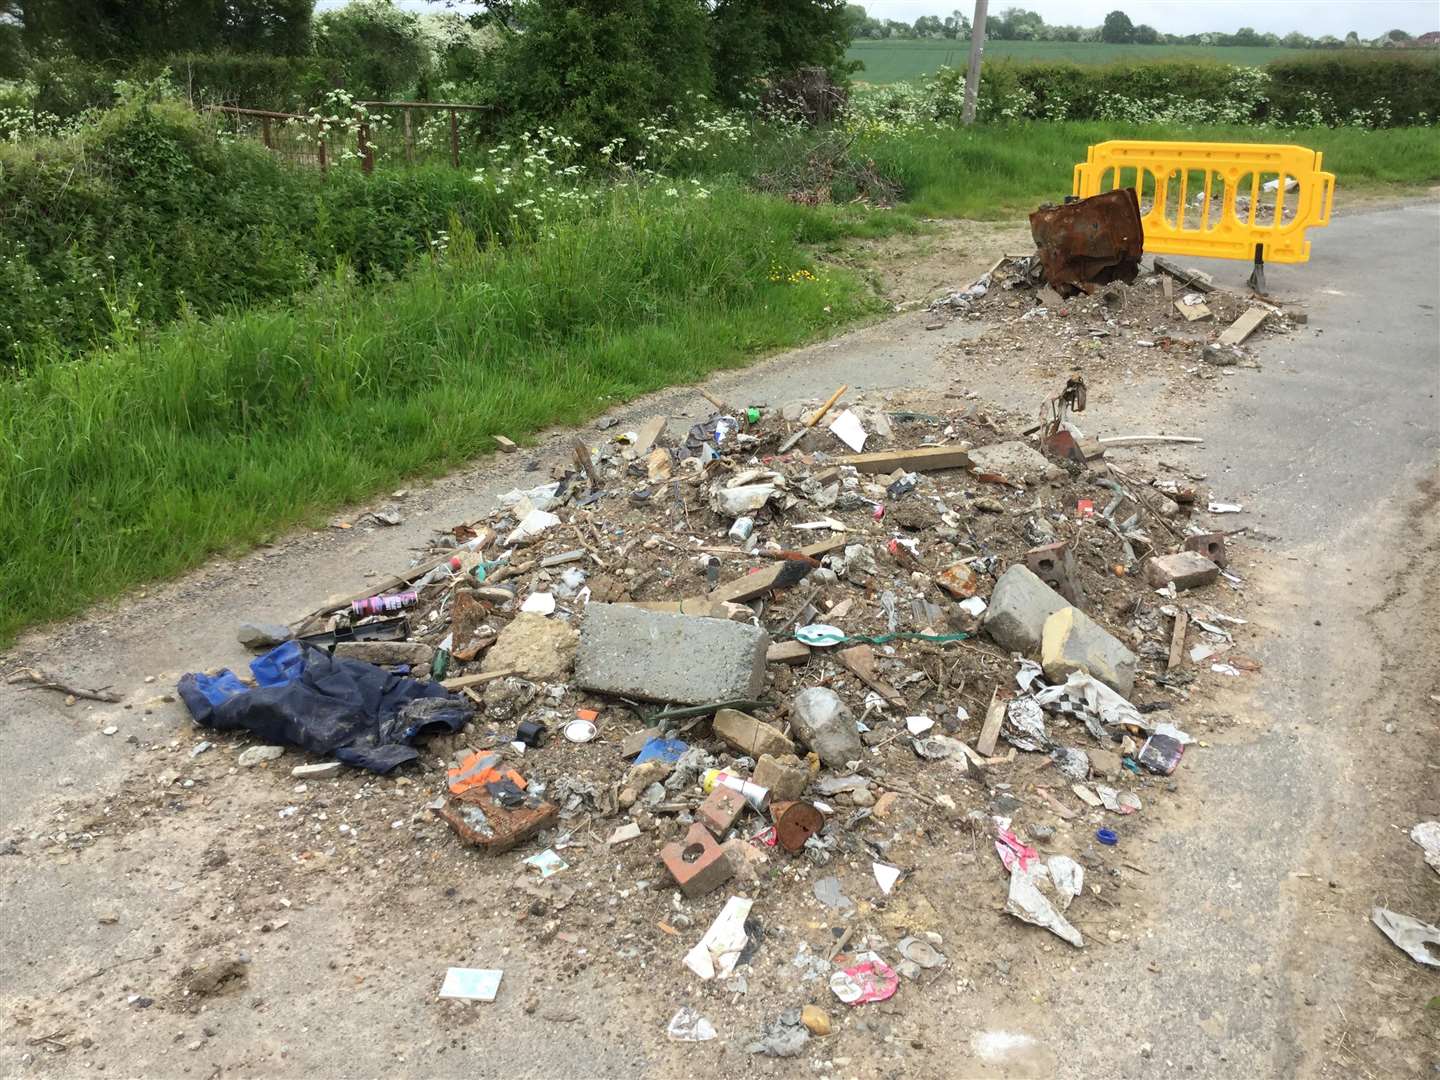 The debris dumped on Chilmington Green Lane